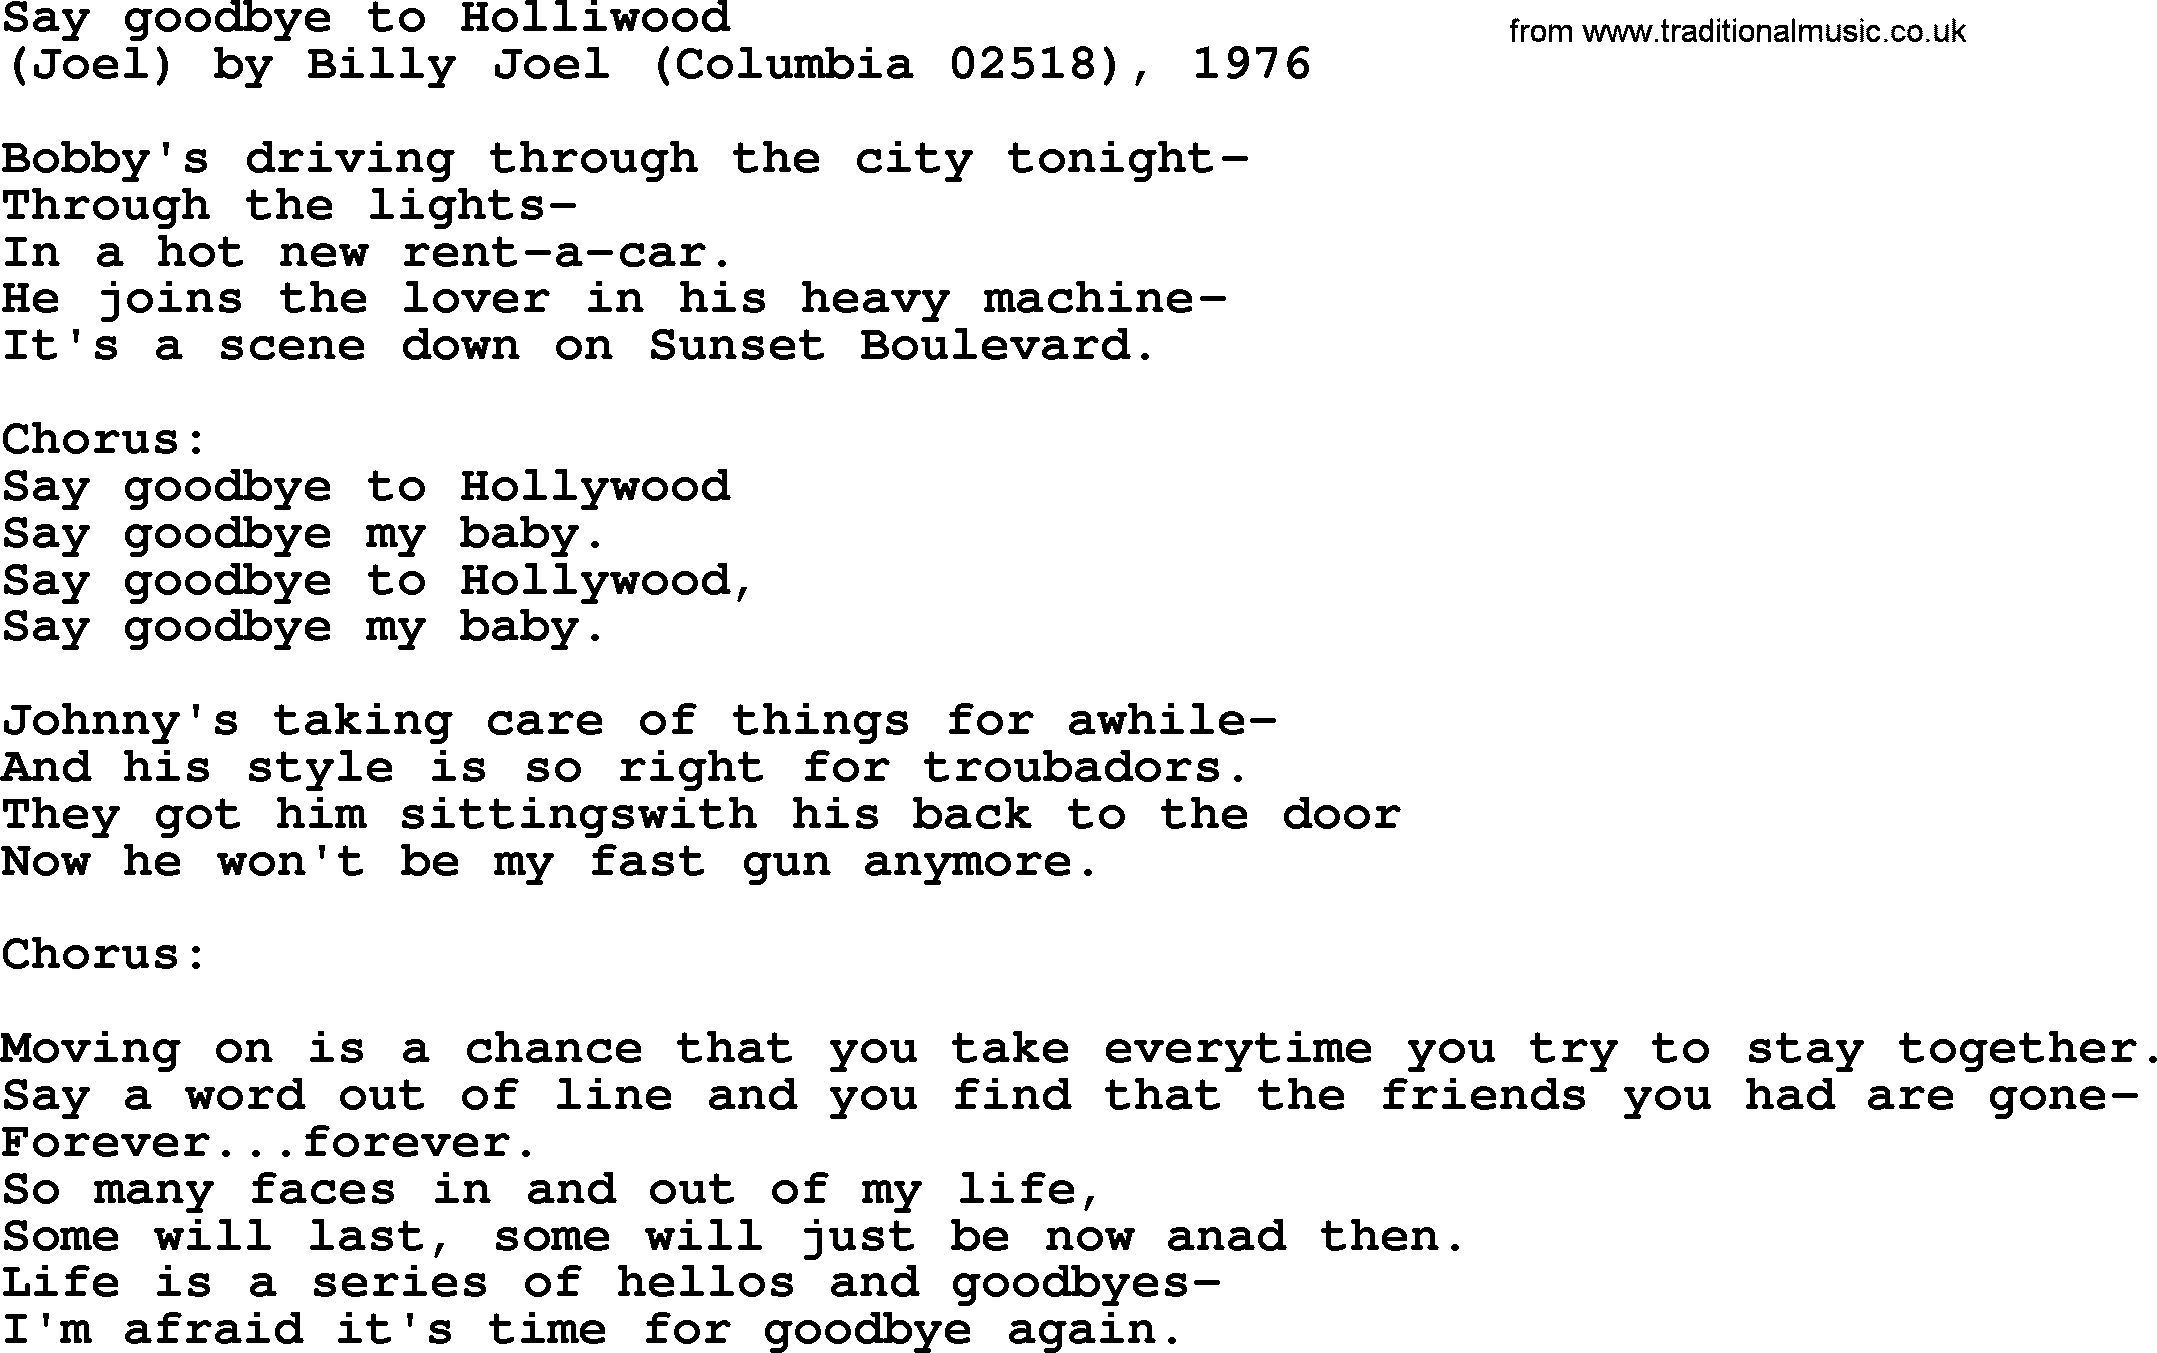 Bruce Springsteen song: Say Goodbye To Holliwood lyrics